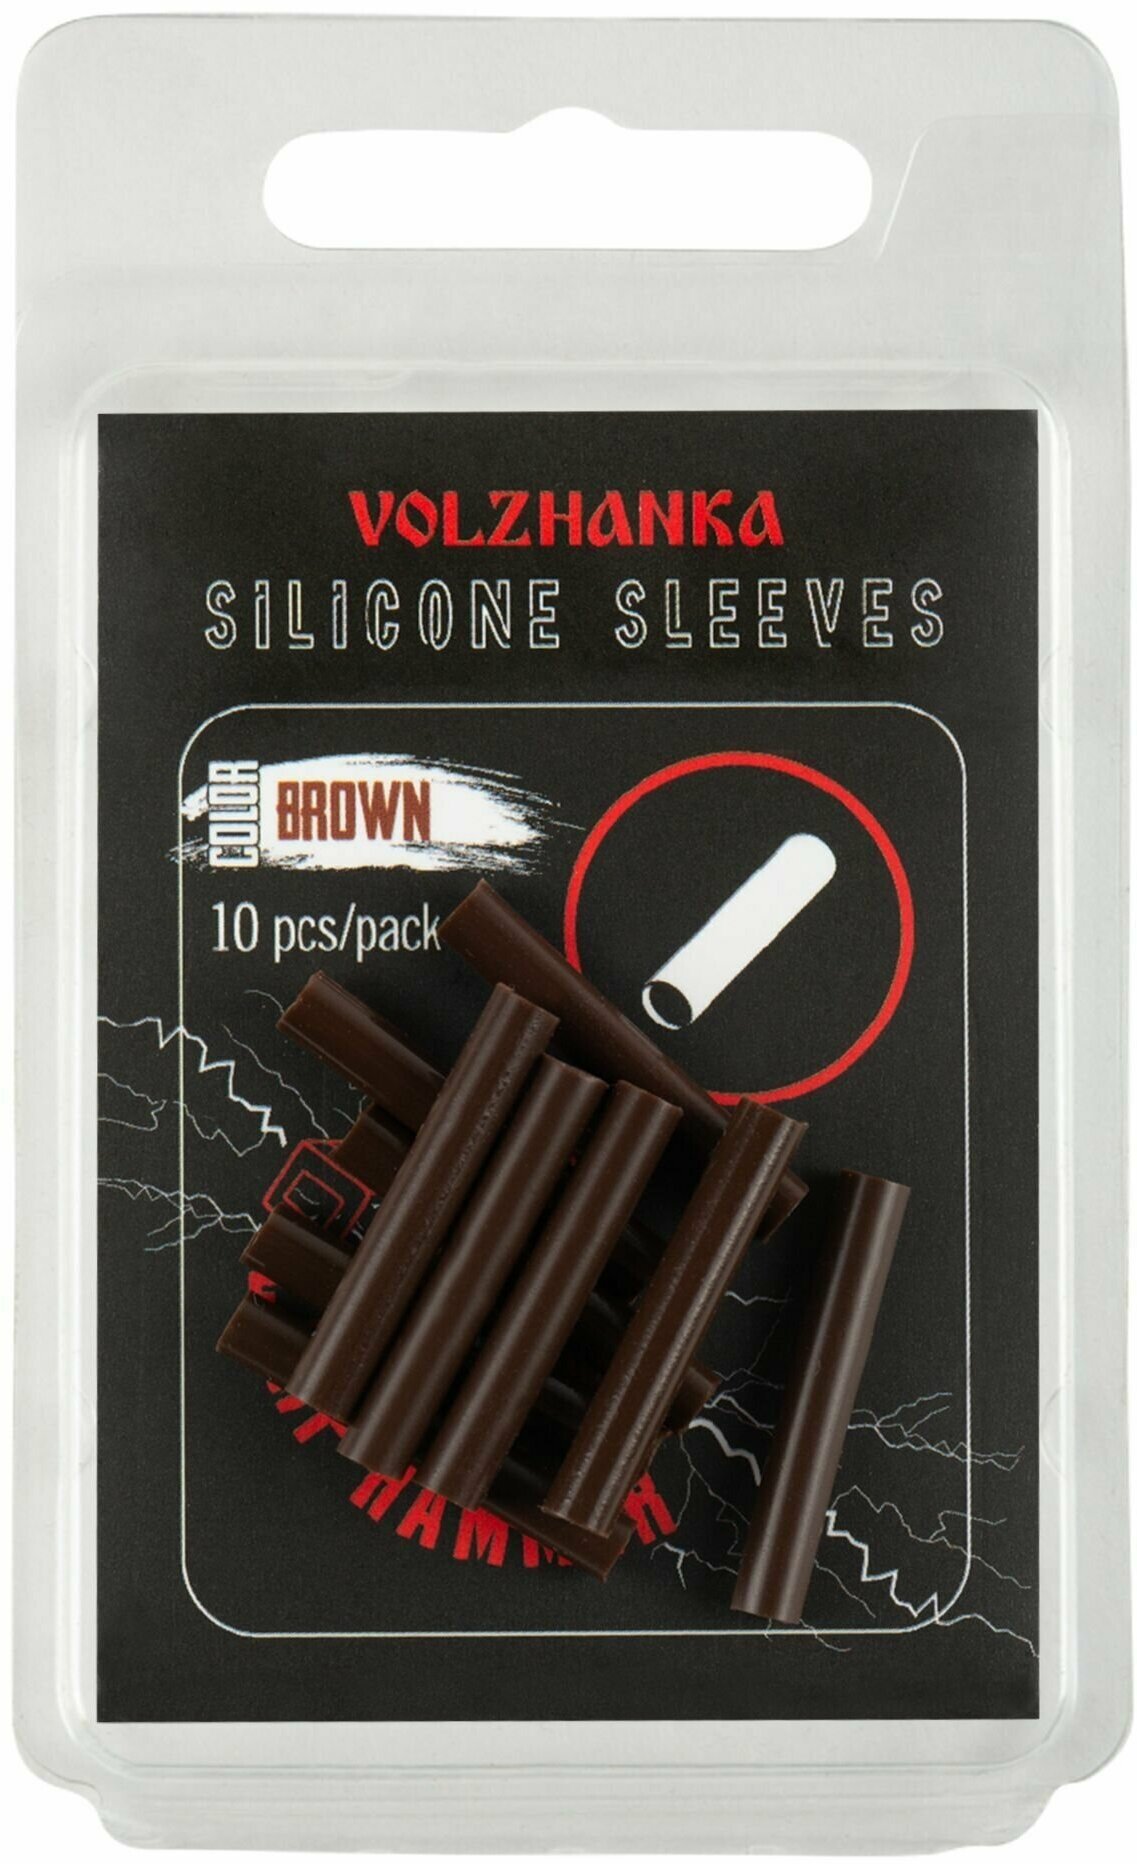 Волжанка Силиконовая трубочка "Volzhanka Silicone Sleeves 3mm" цвет Brown (10шт/уп) Волжанка аксессуар для карповой ловли Карп Хаммер